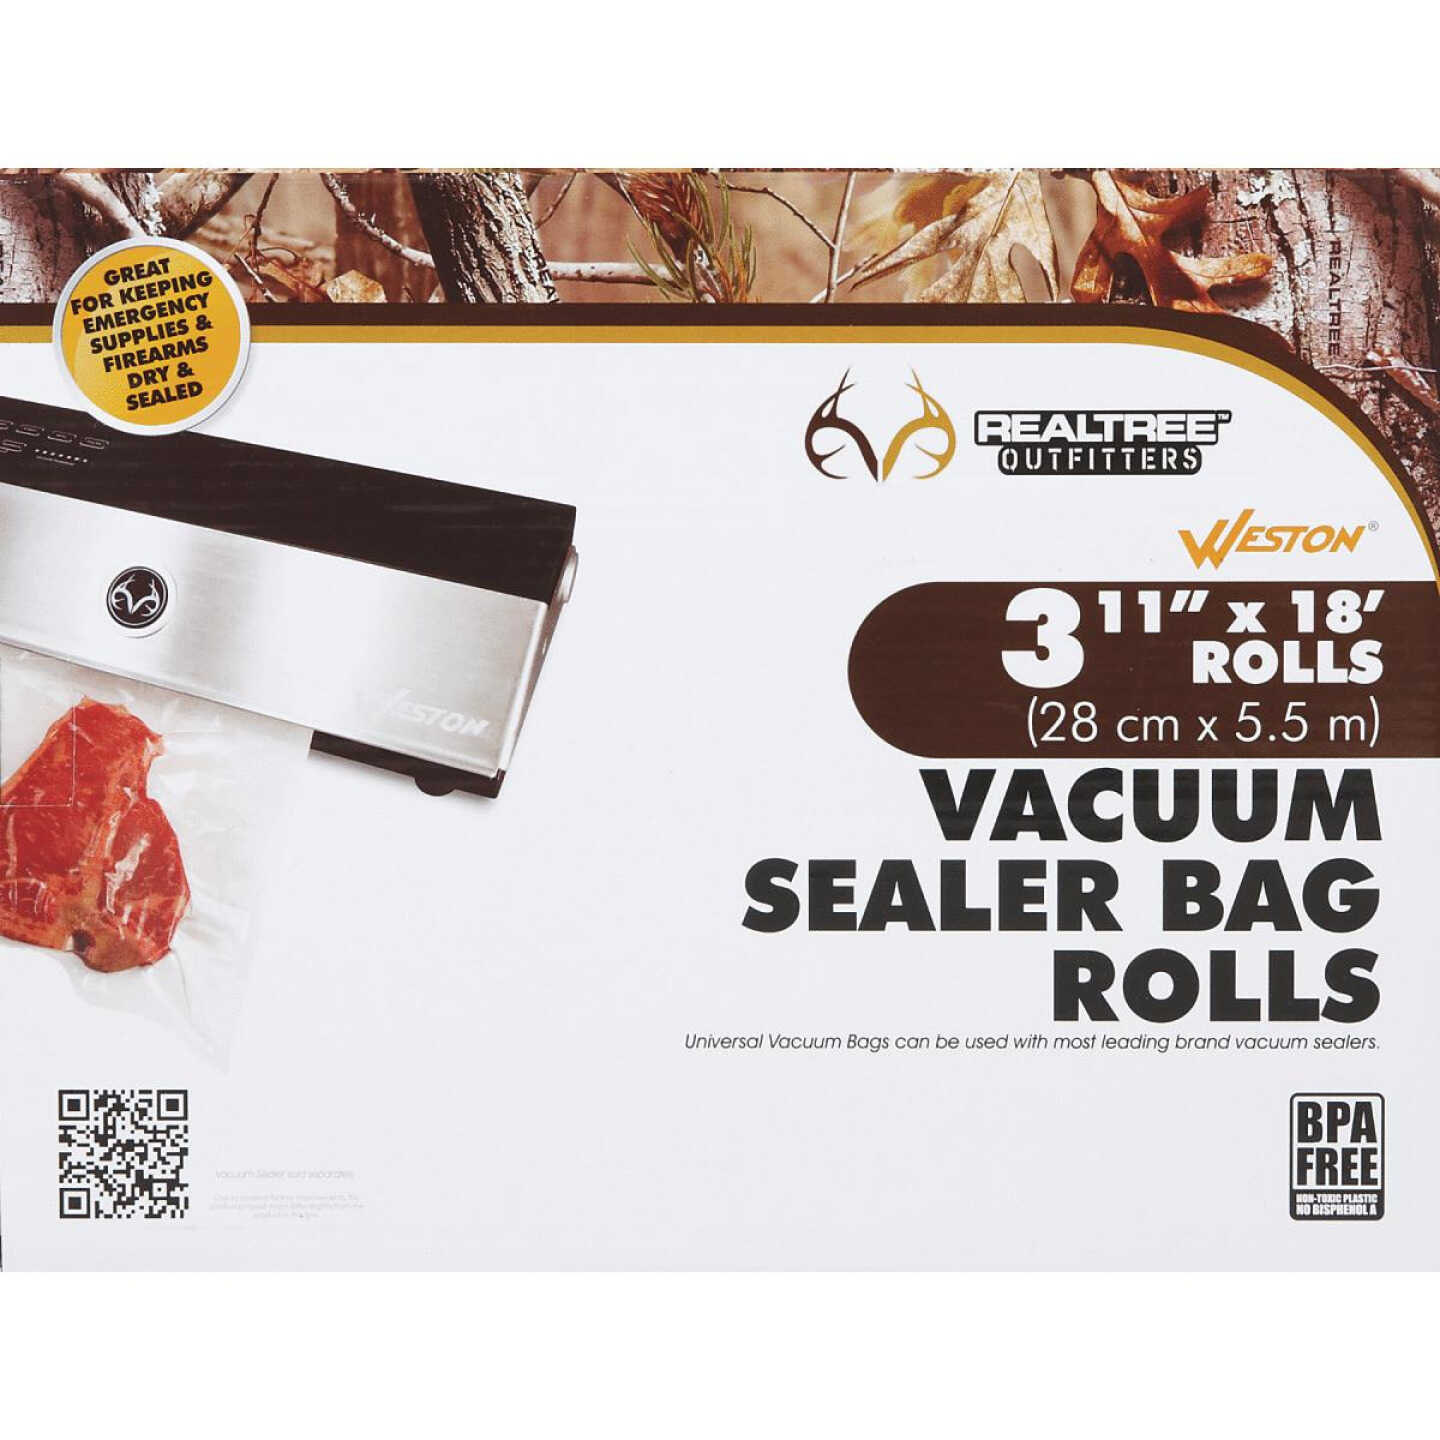 RealTree 11 In. x 18 Ft. Gallon Vacuum Sealer Bag Roll (3 Pack